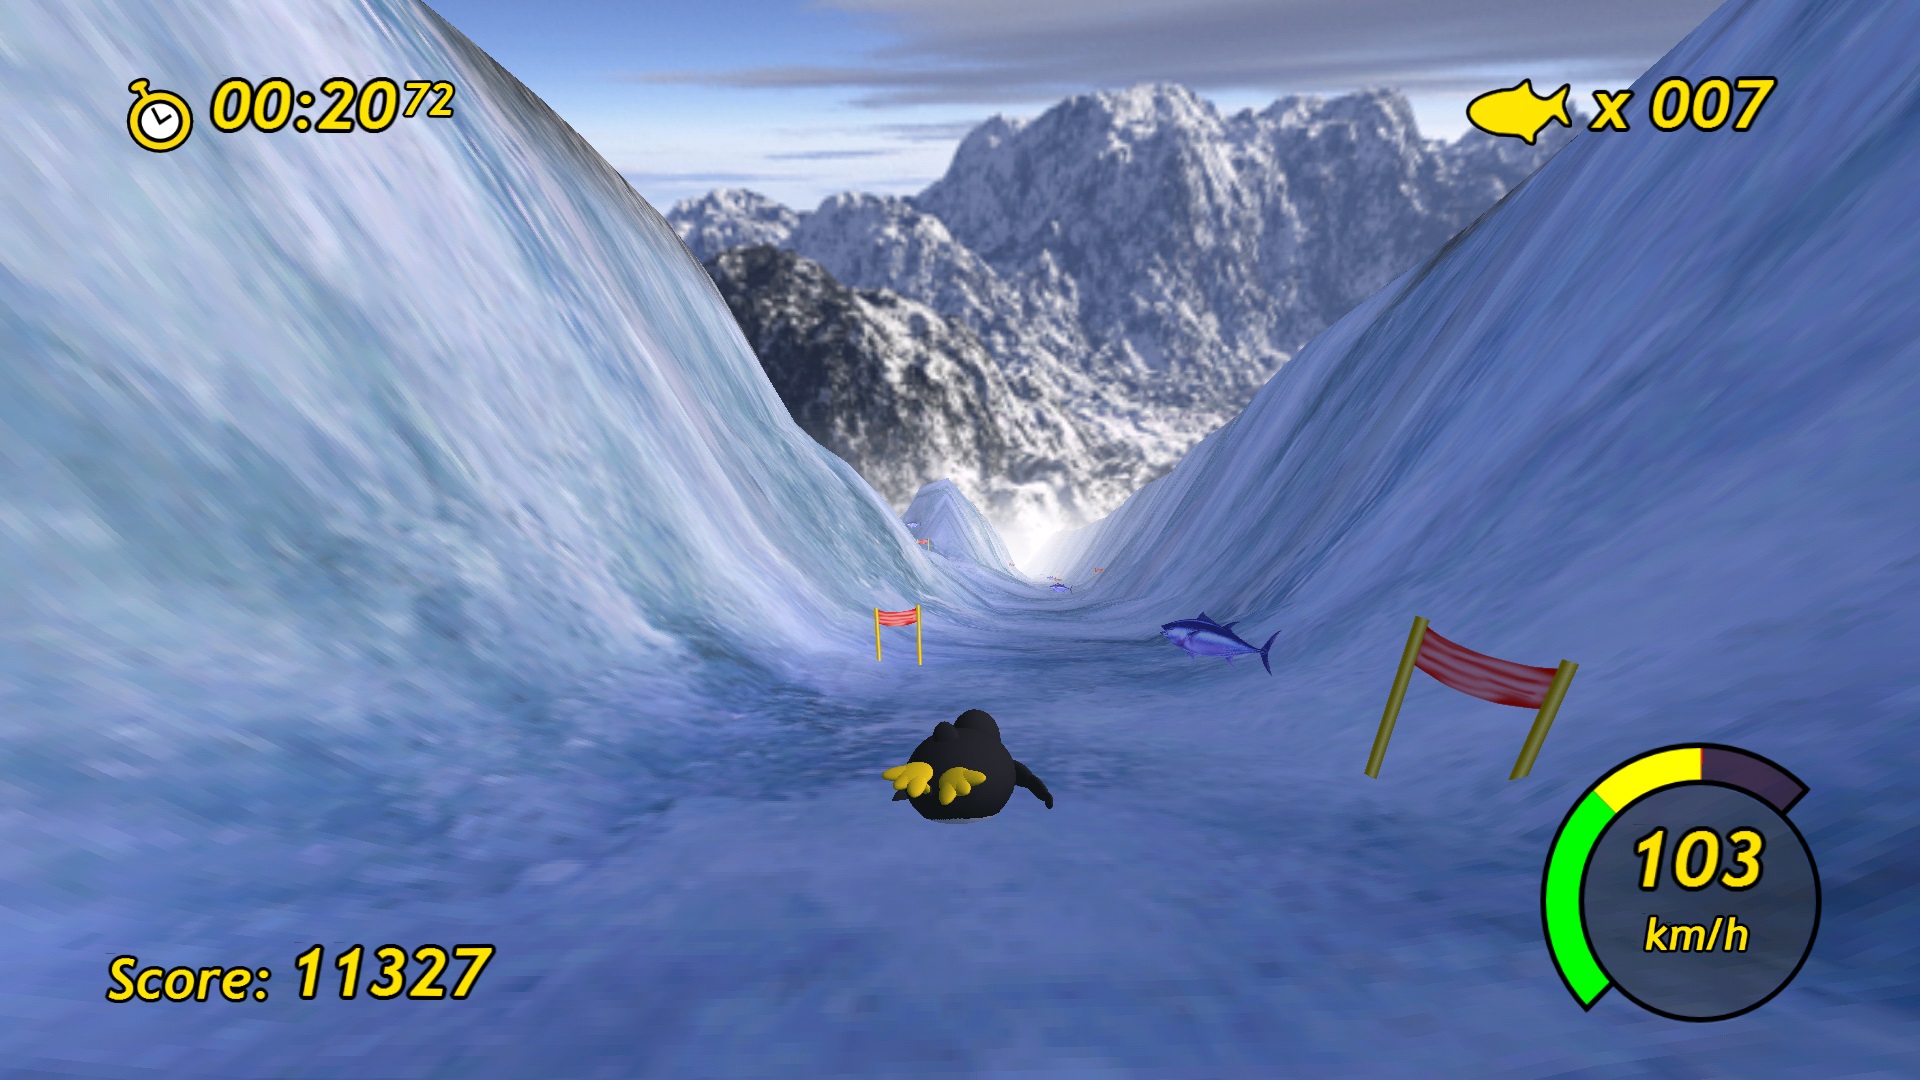 Screenshot of Tux Racer